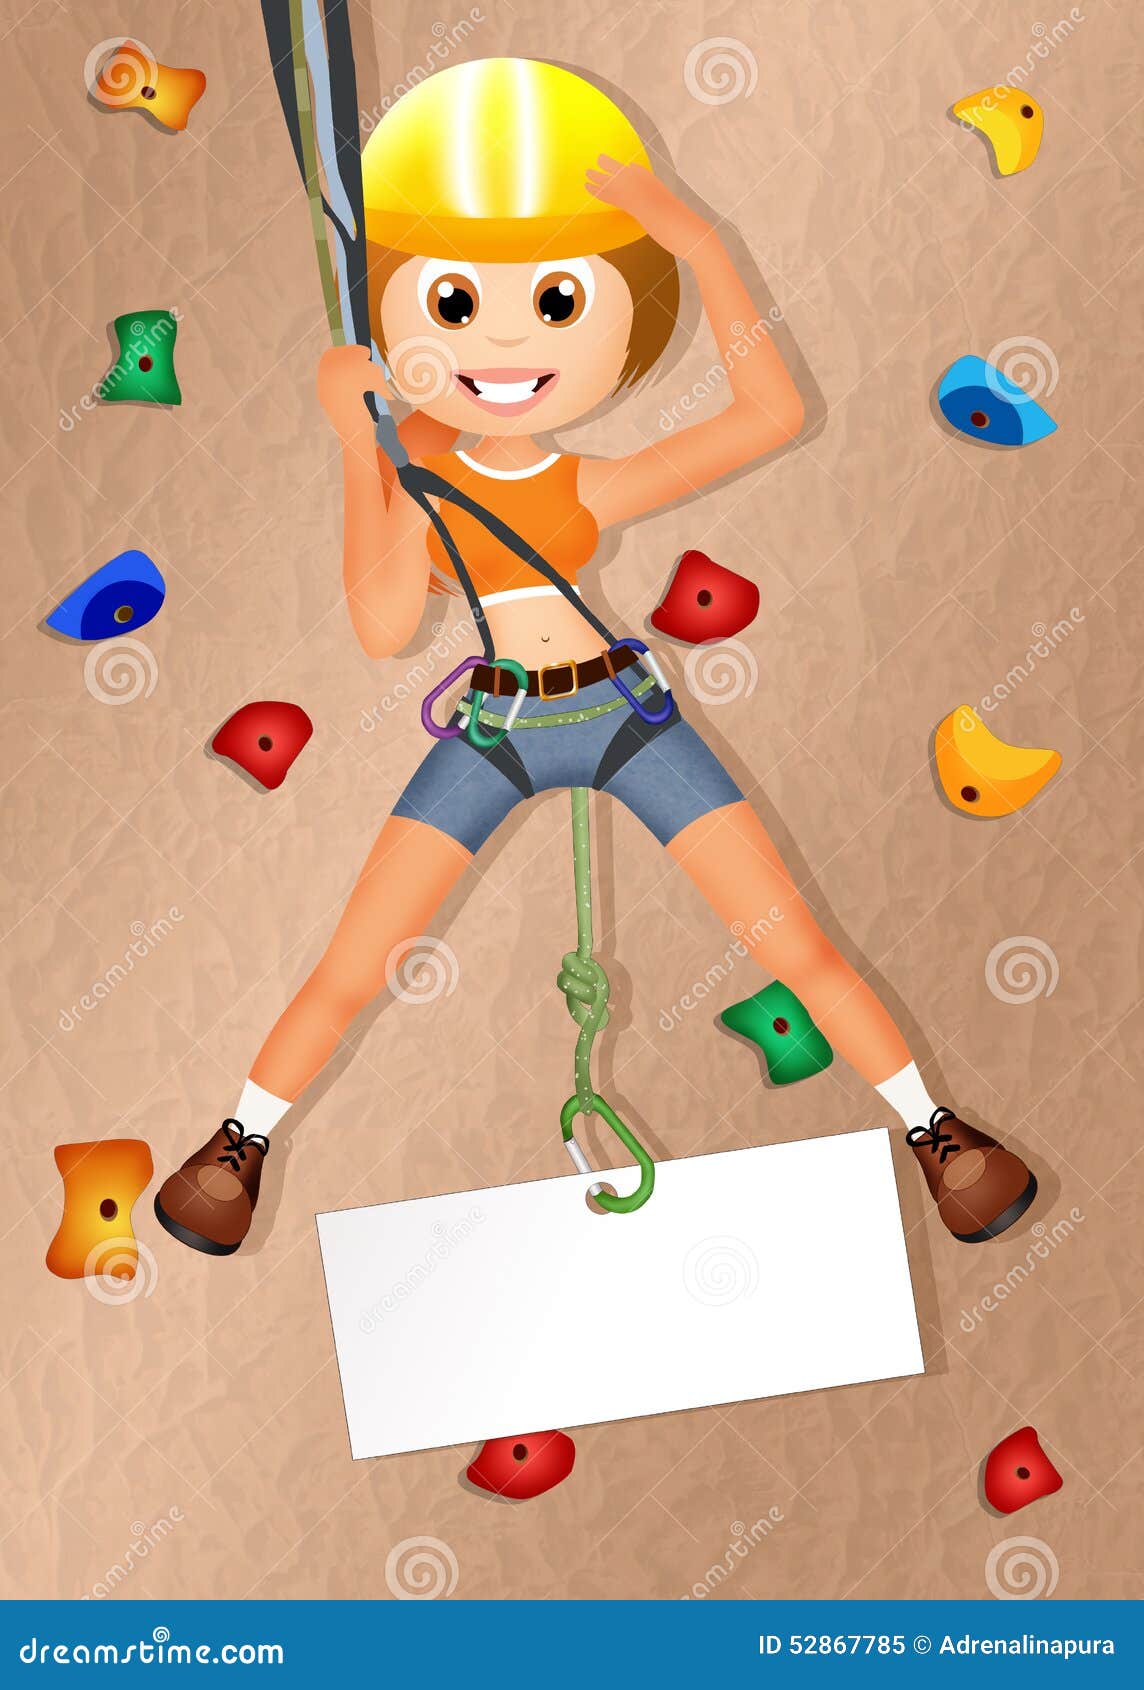 Rock climbing stock illustration. Illustration of hanging - 52867785